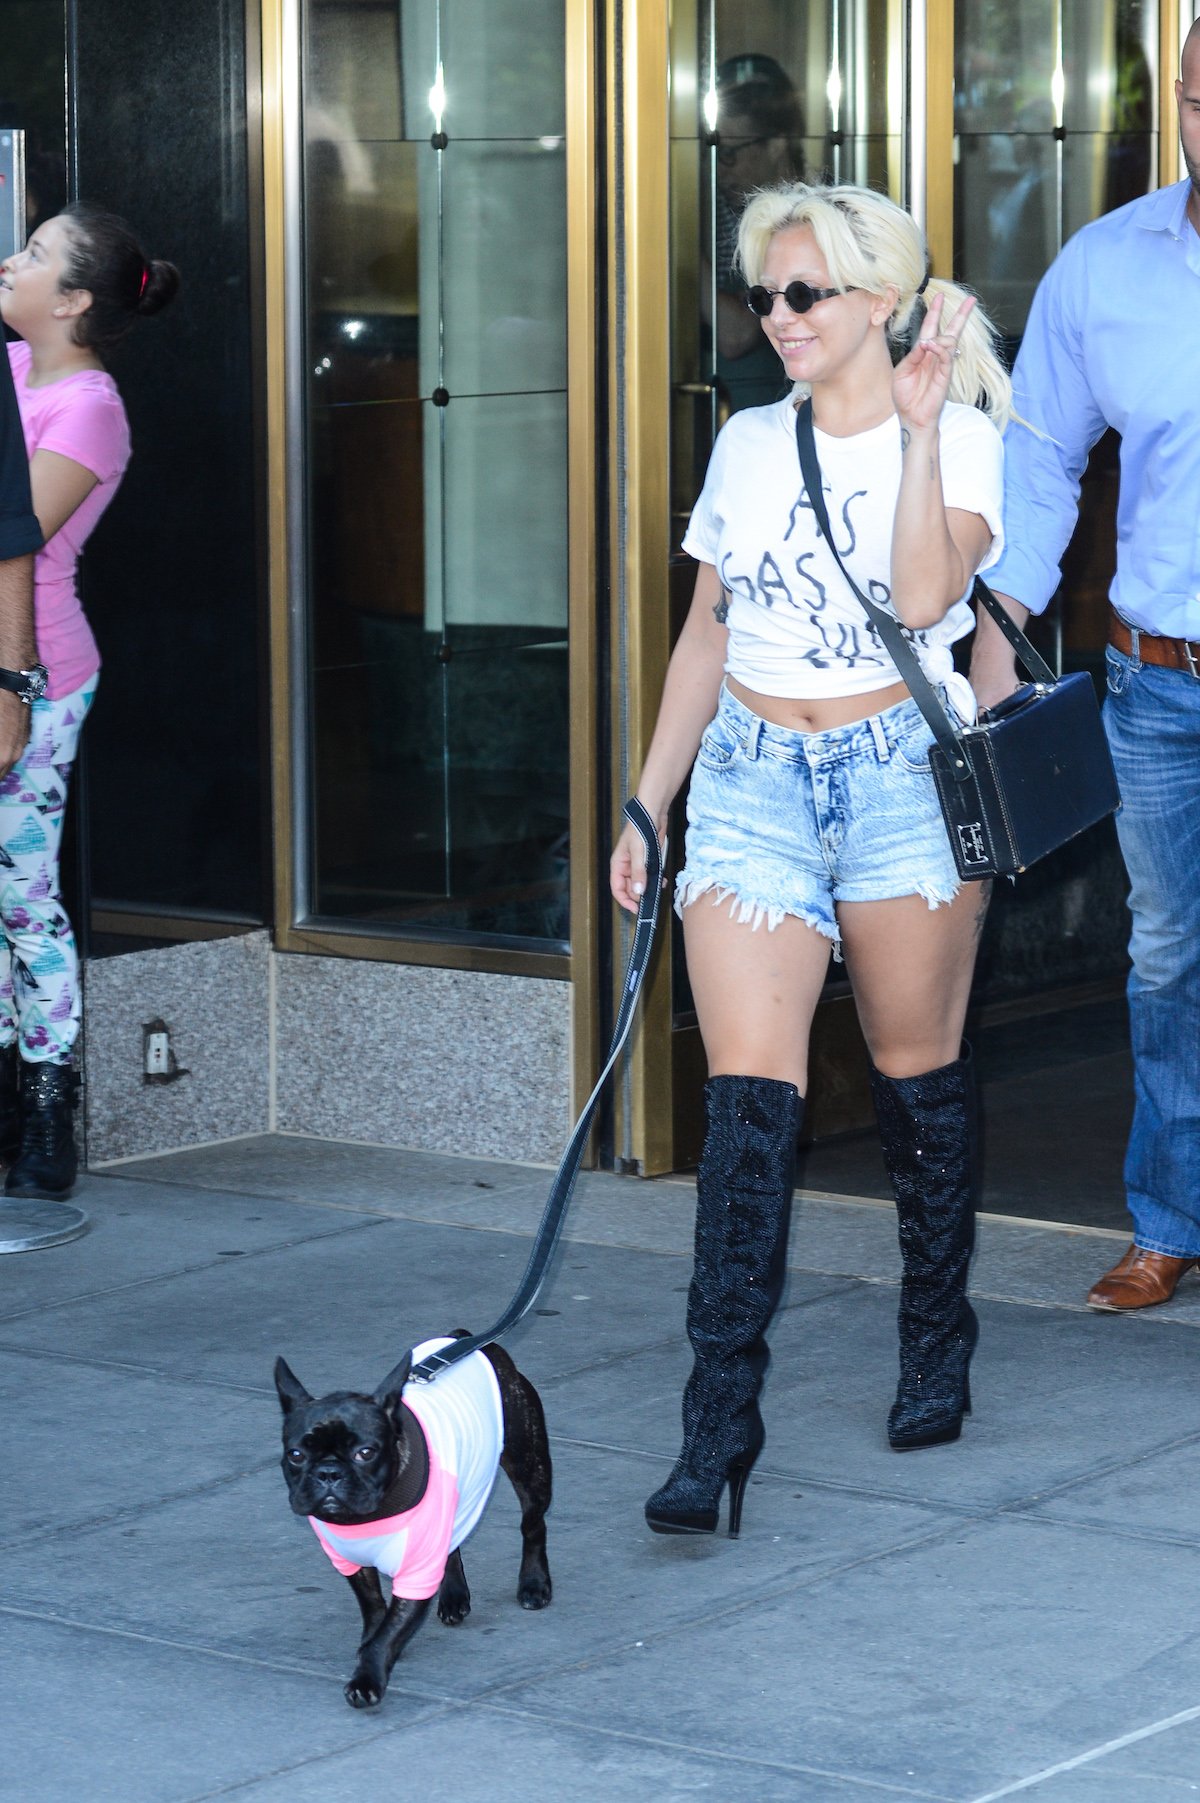 Lady Gaga in a white crop top and denim shorts walking a black dog.